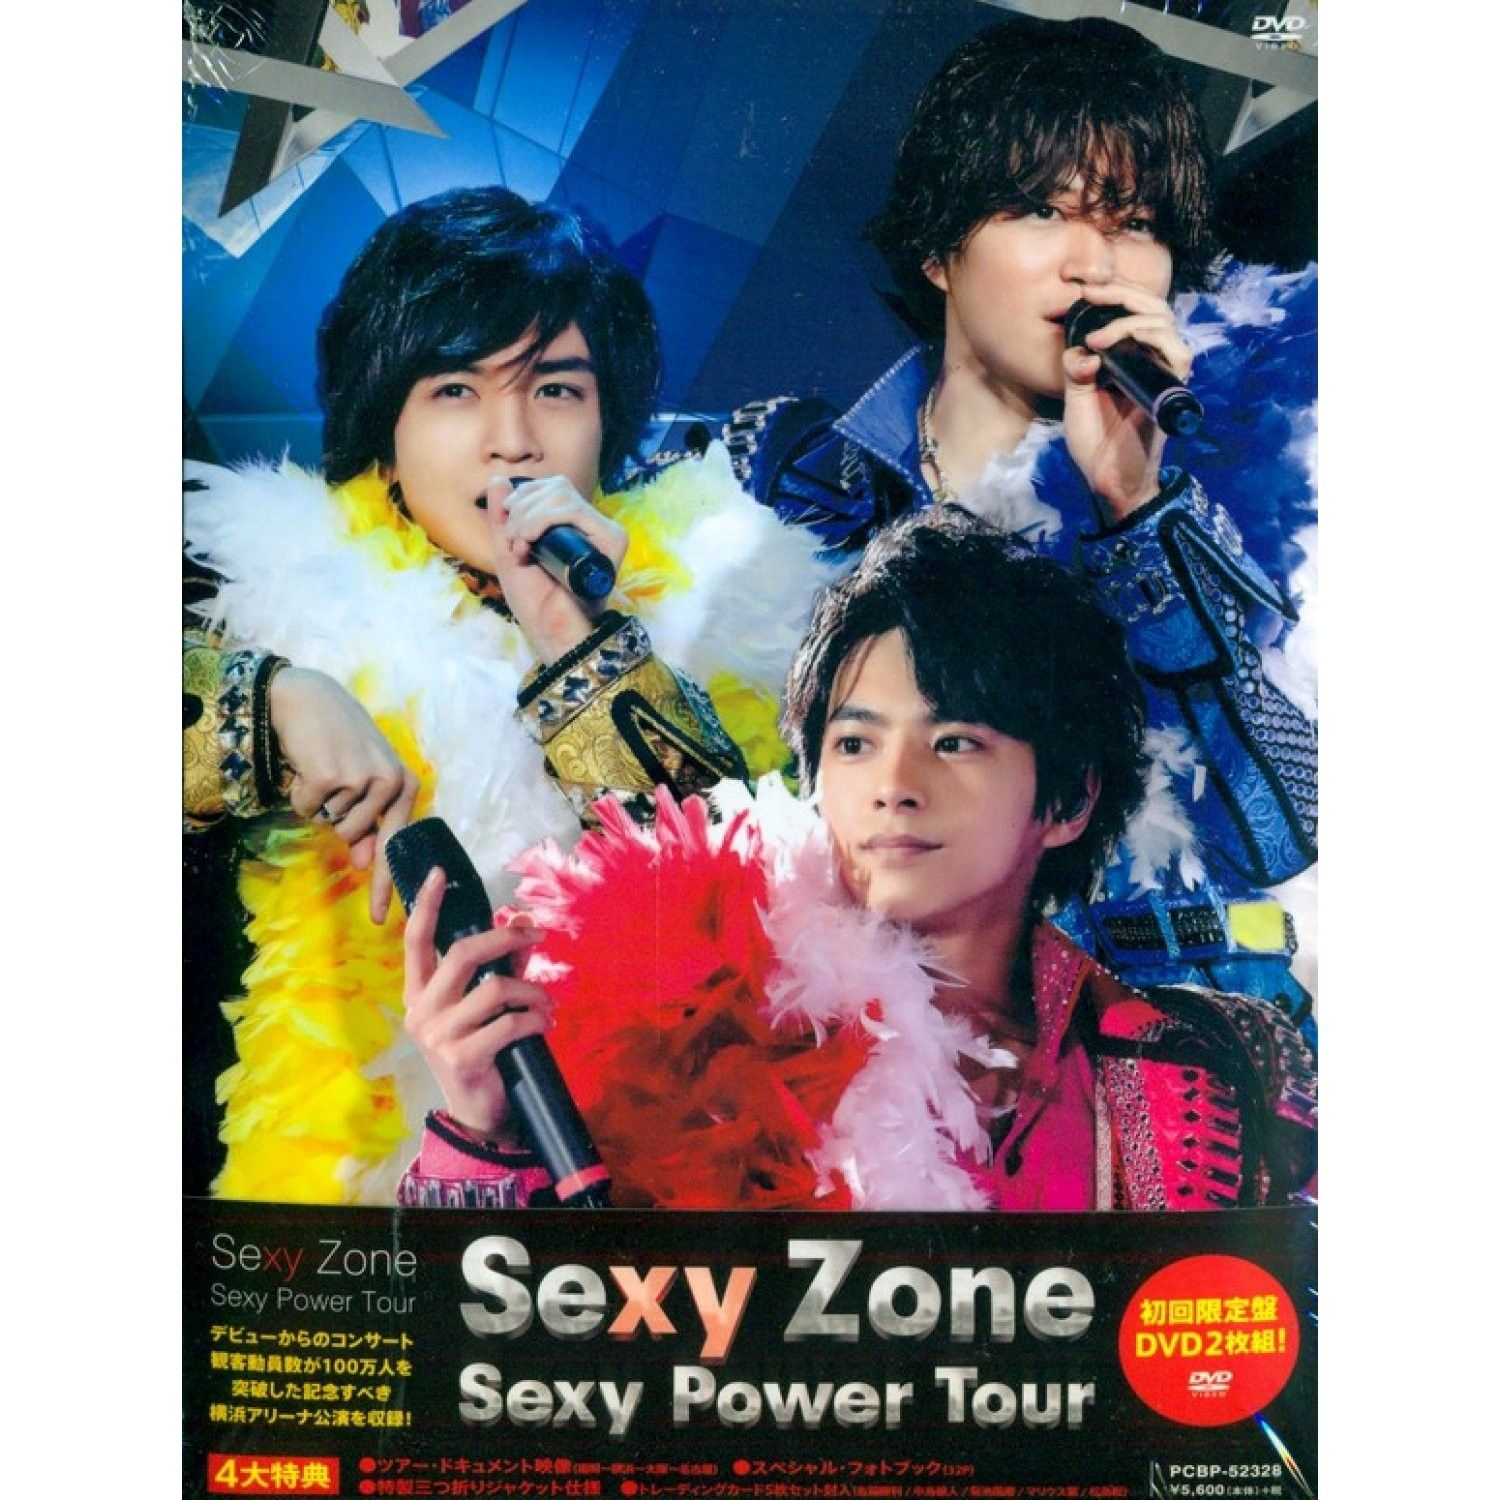 SZ10TH、ジャニフェス、Sexy Power Tour 初回限定盤セットCD